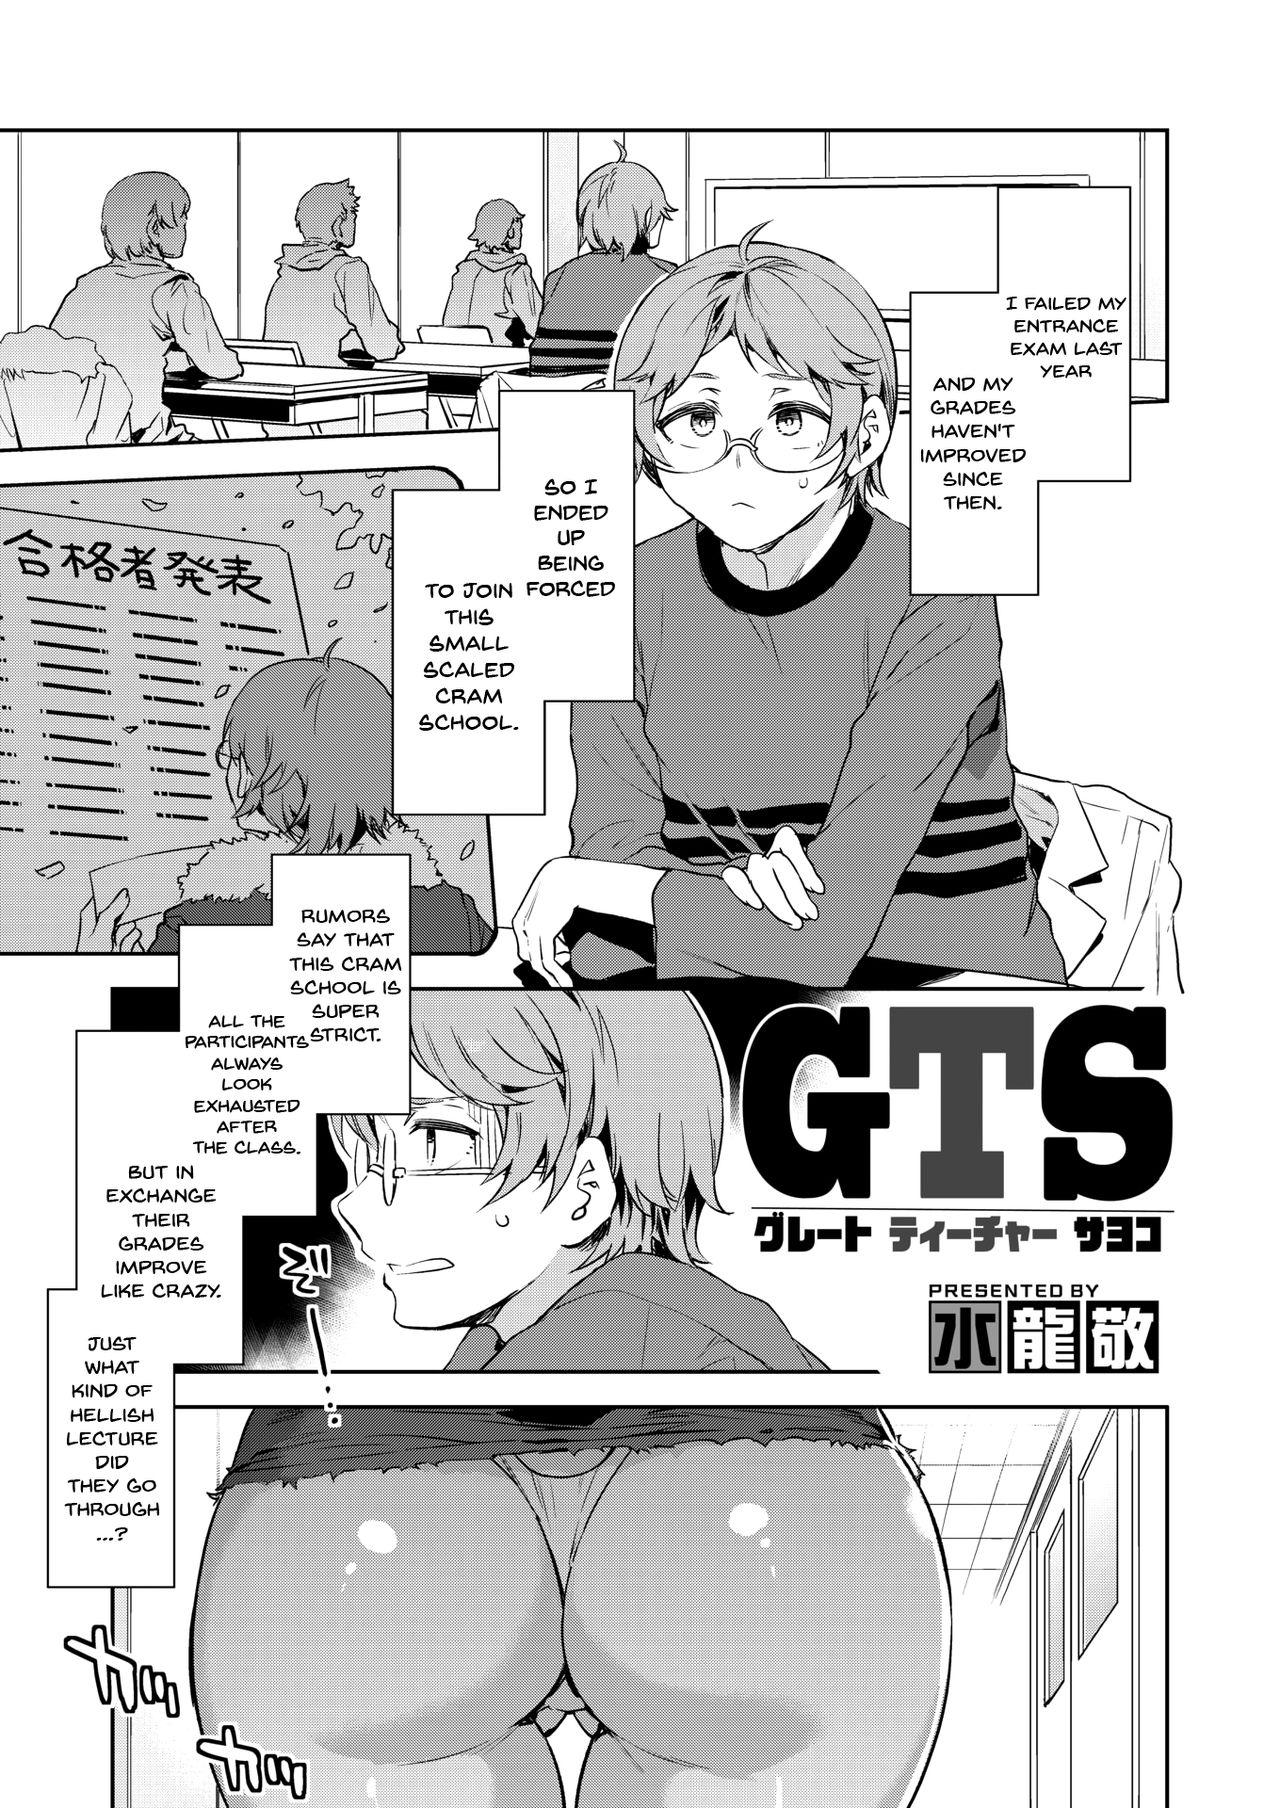 Bush GTS | GTS - Great Teacher Sayoko Boyfriend - Page 1